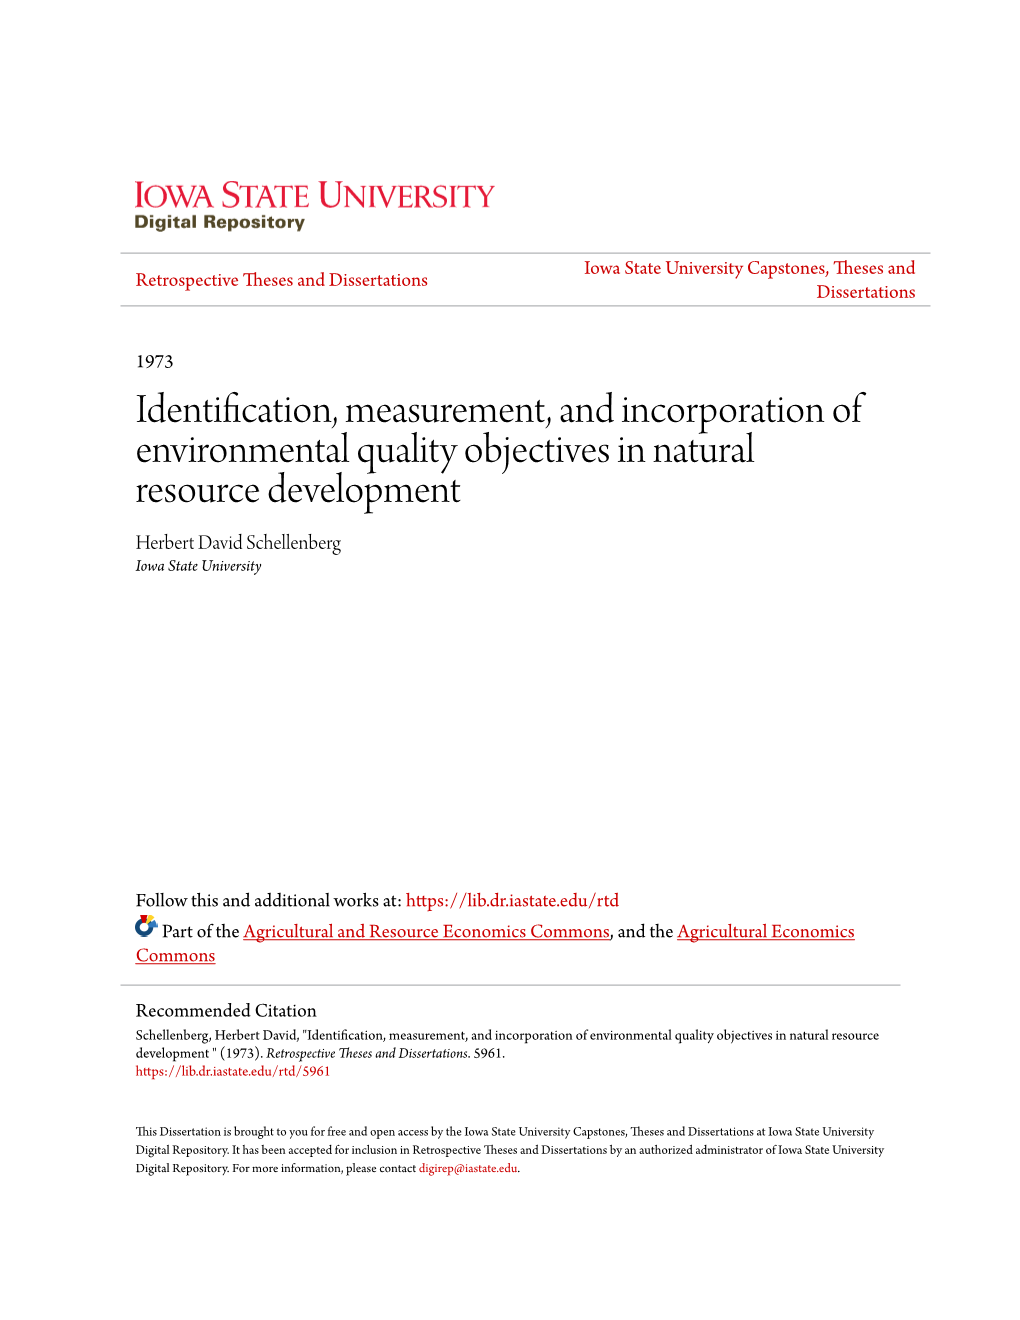 Identification, Measurement, and Incorporation of Environmental Quality Objectives in Natural Resource Development Herbert David Schellenberg Iowa State University